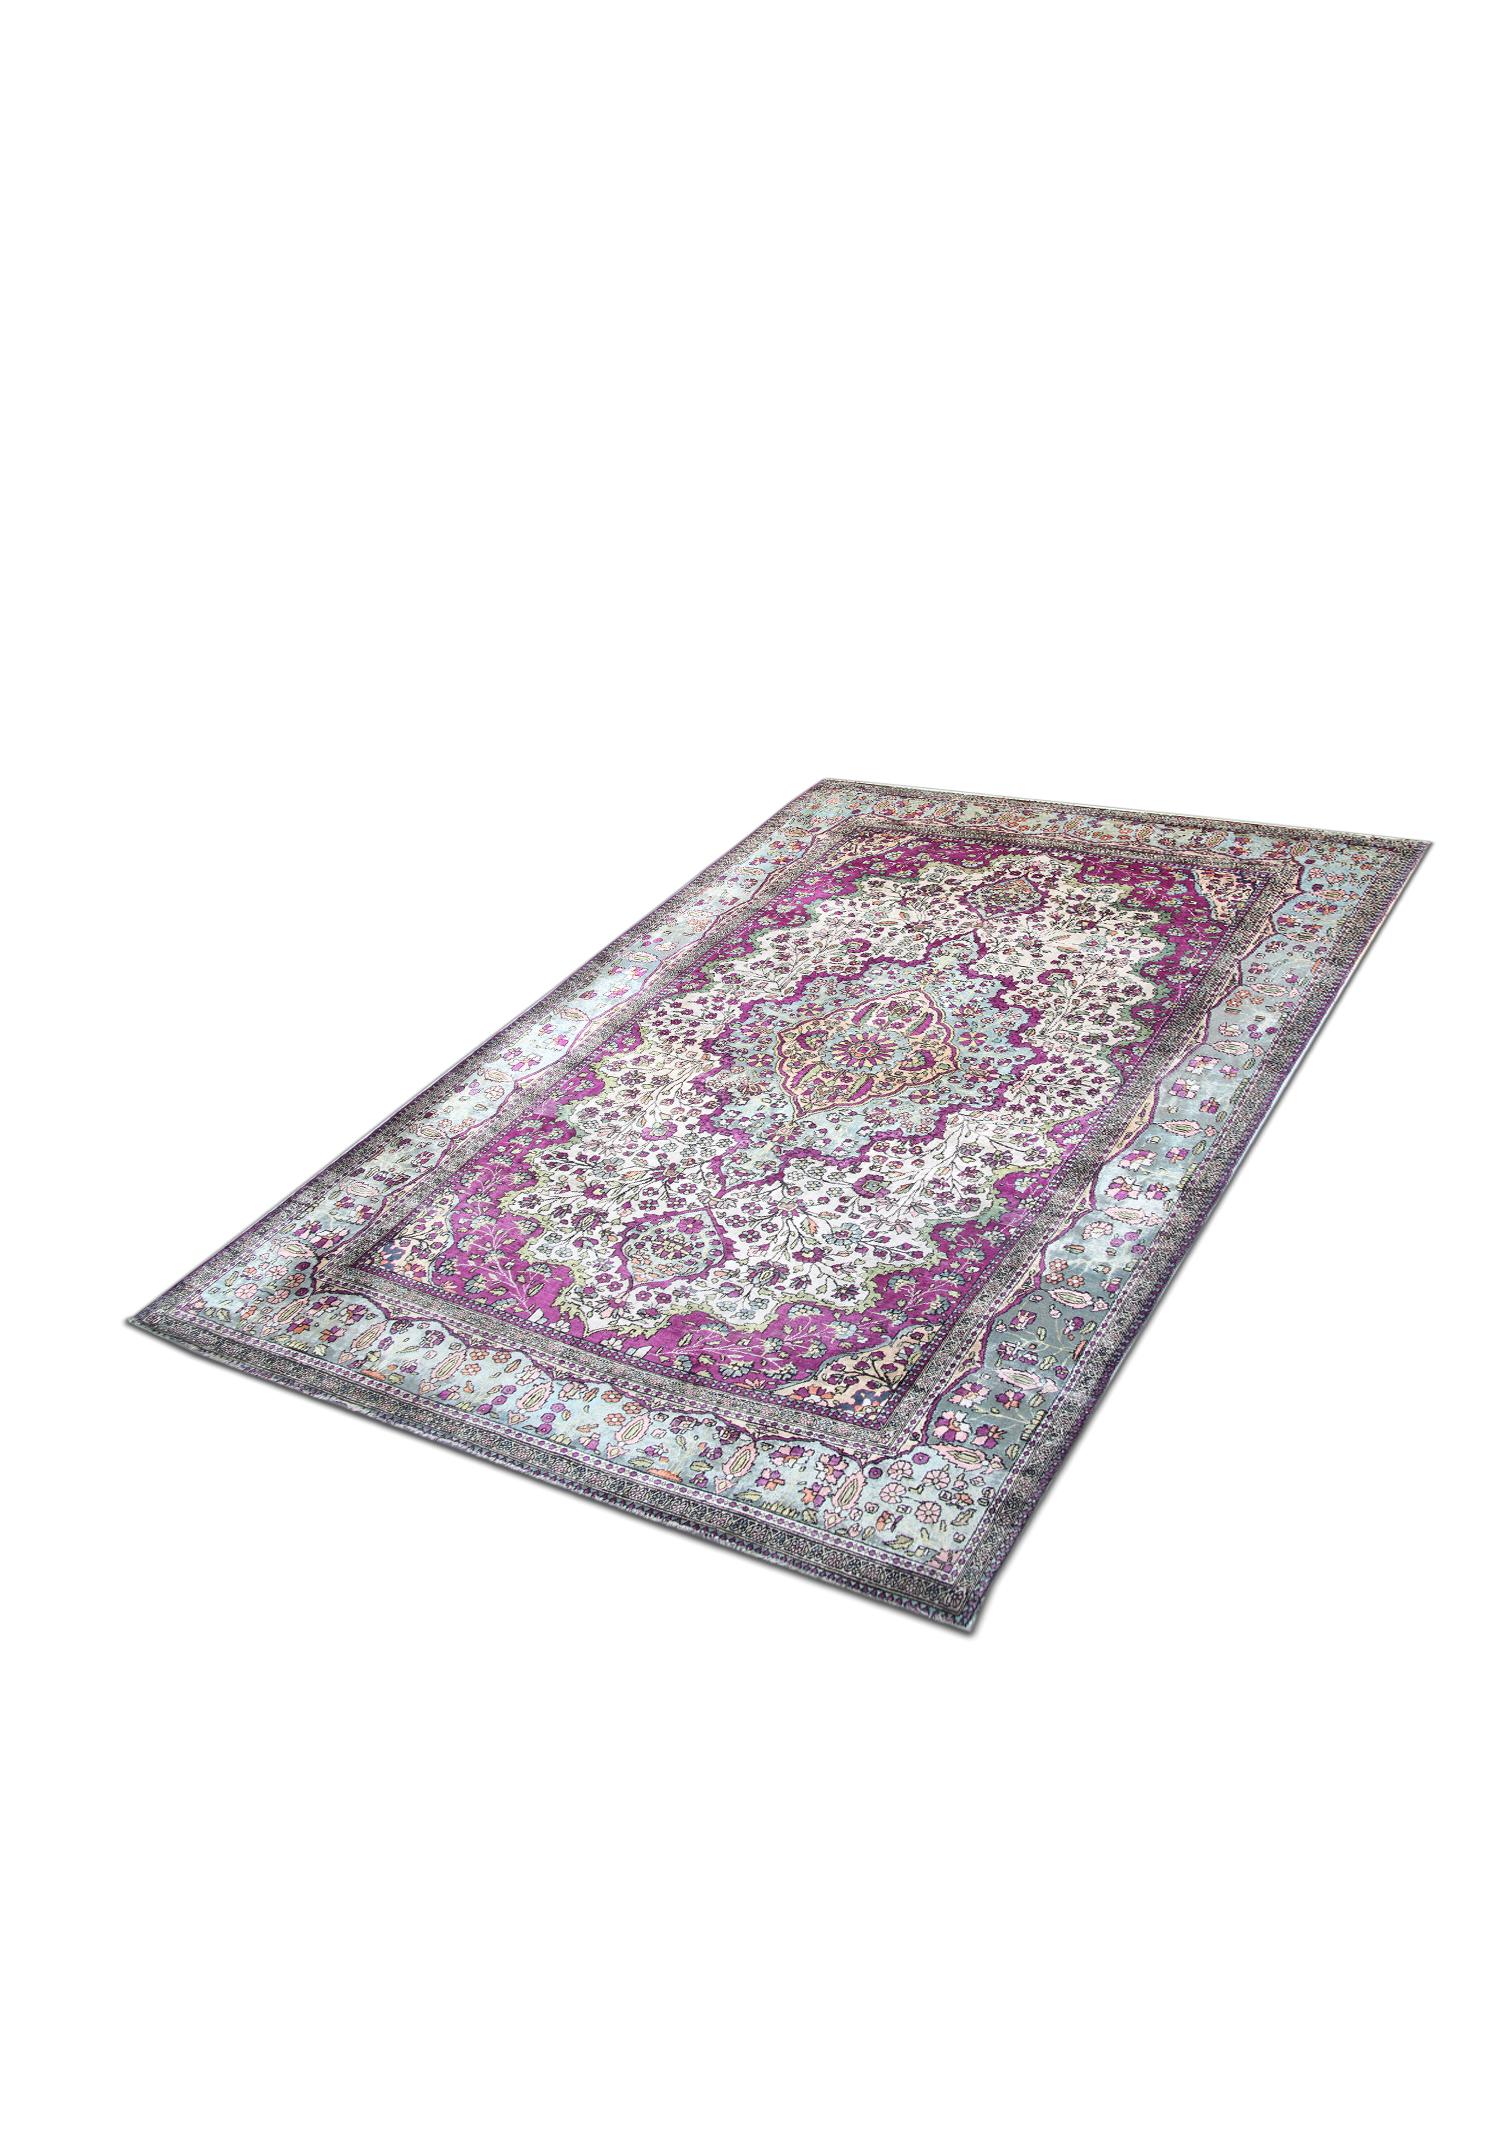 Early Victorian Antique Purple Cream Silk Rug Handwoven Mohtasham Living Room Carpet For Sale